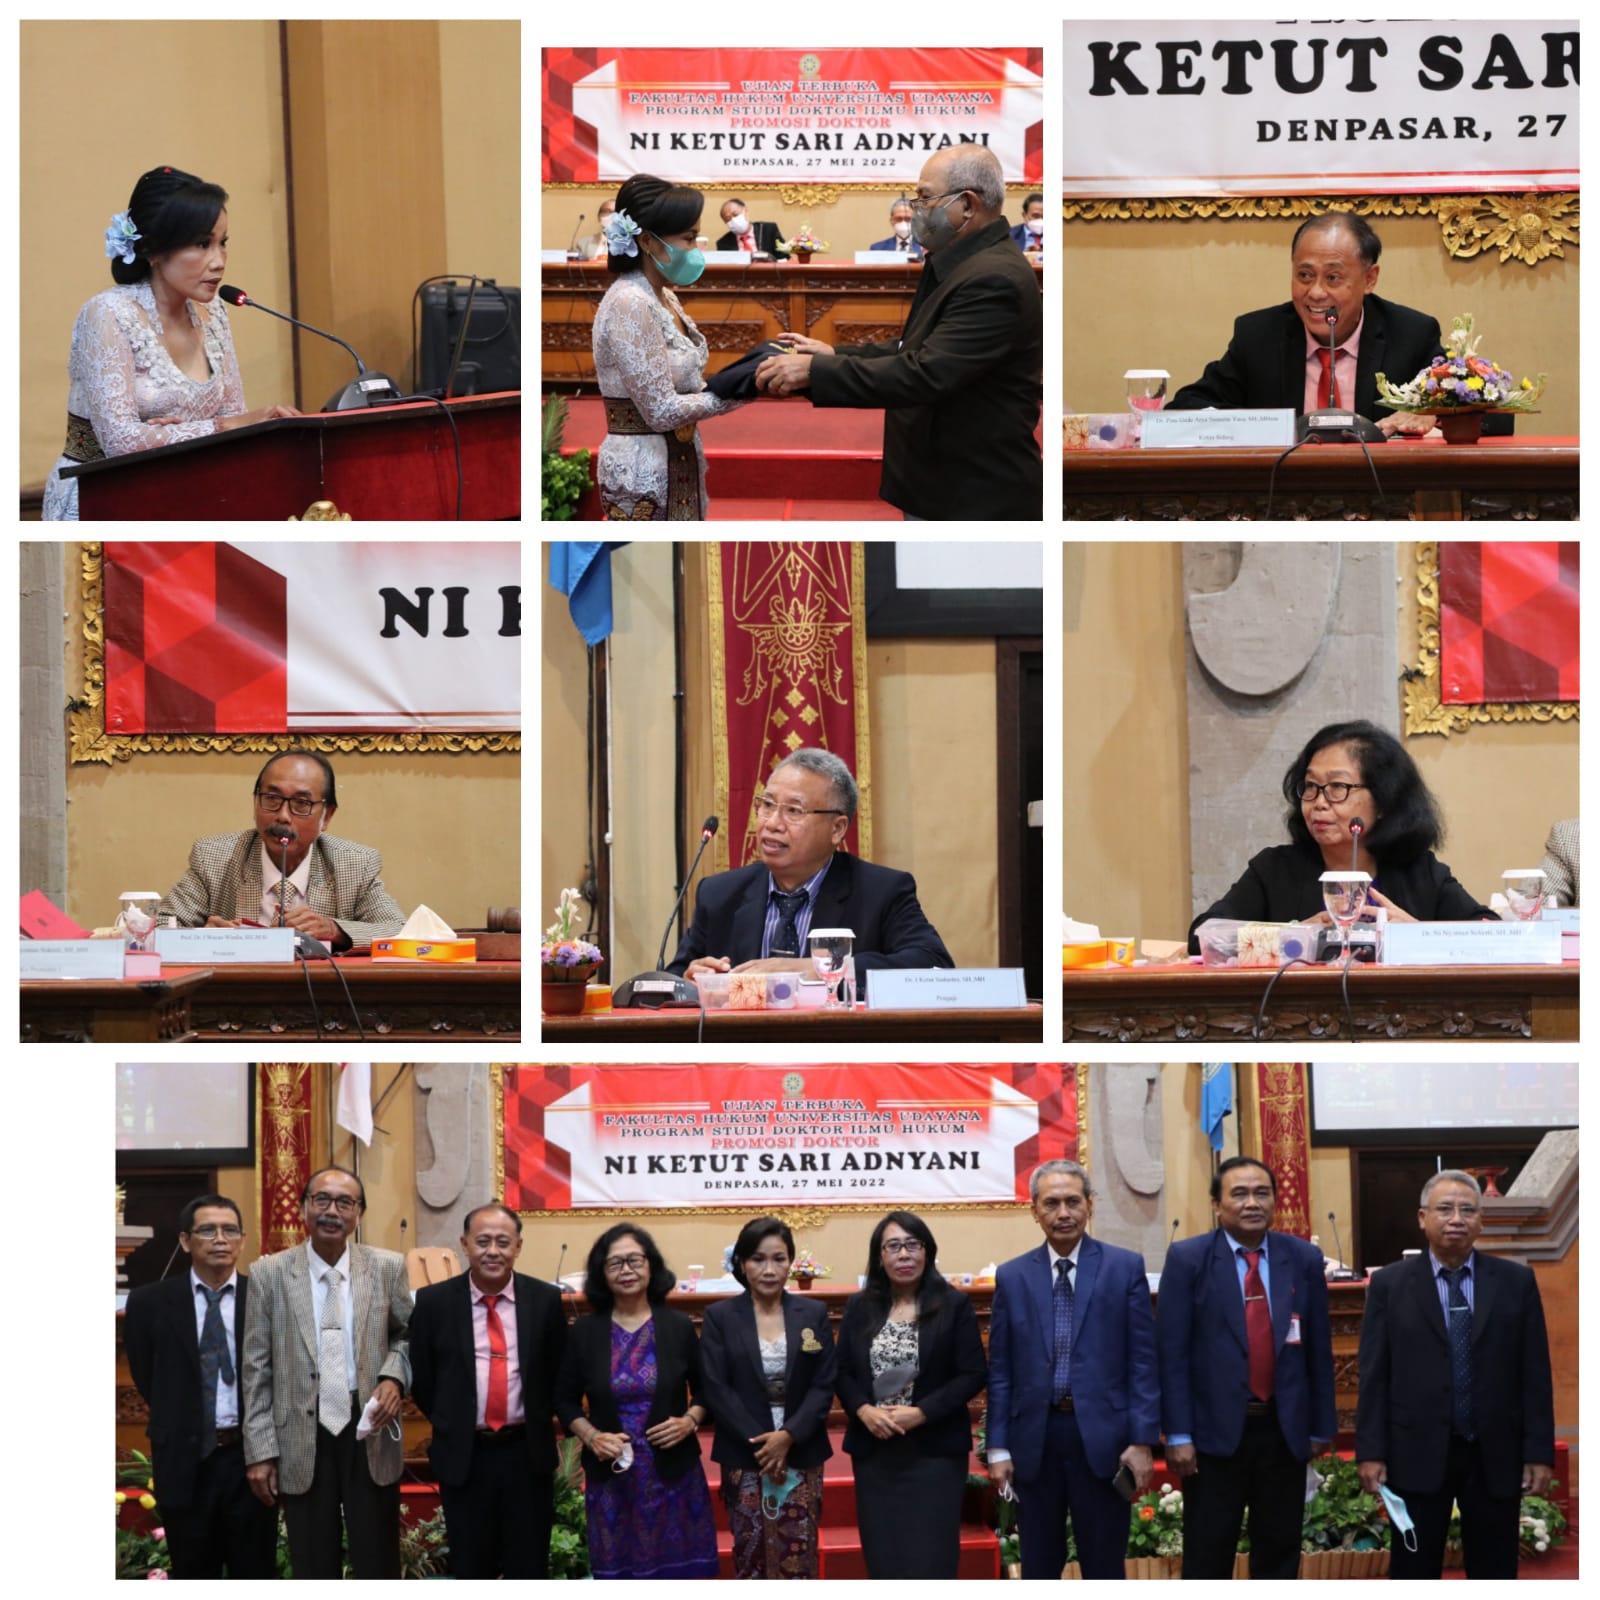 Ni Ketut Sari Adnyani With a Dissertation Title: 